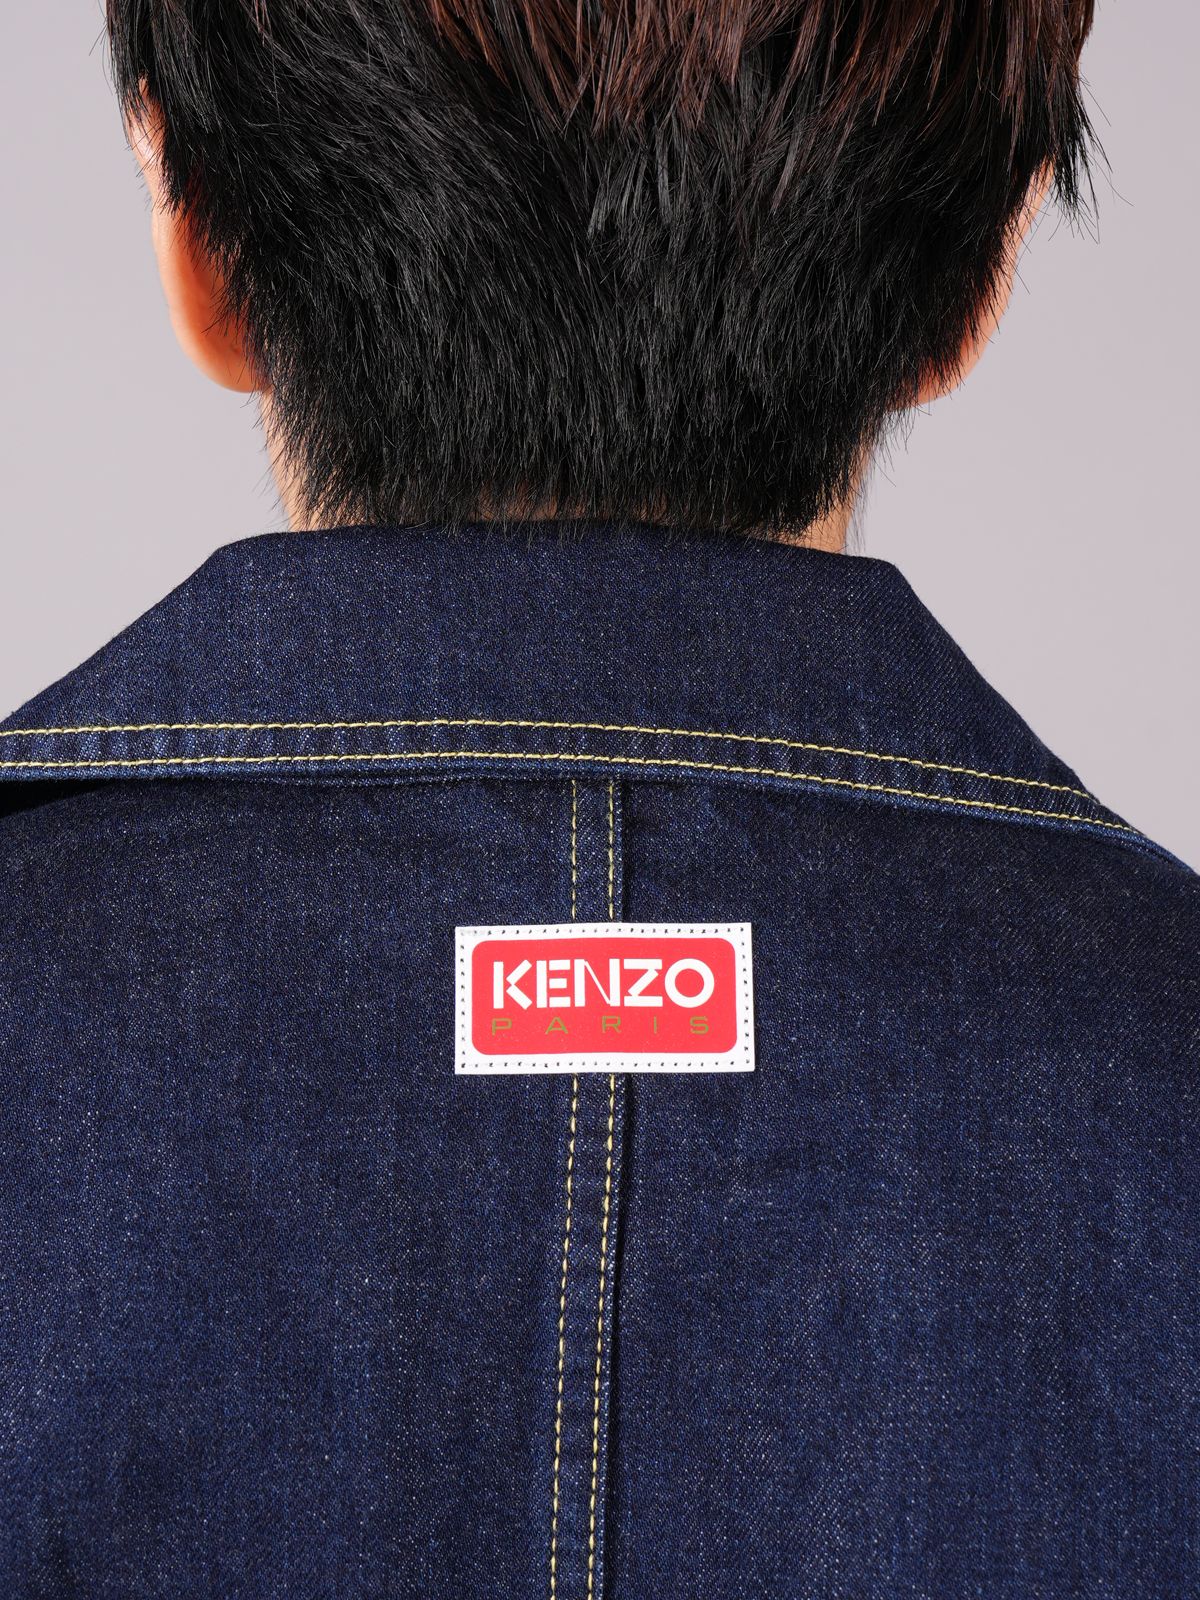 KENZO - 【ラスト1点】'KENZO TARGET' DENIM WORKWEAR JACKET